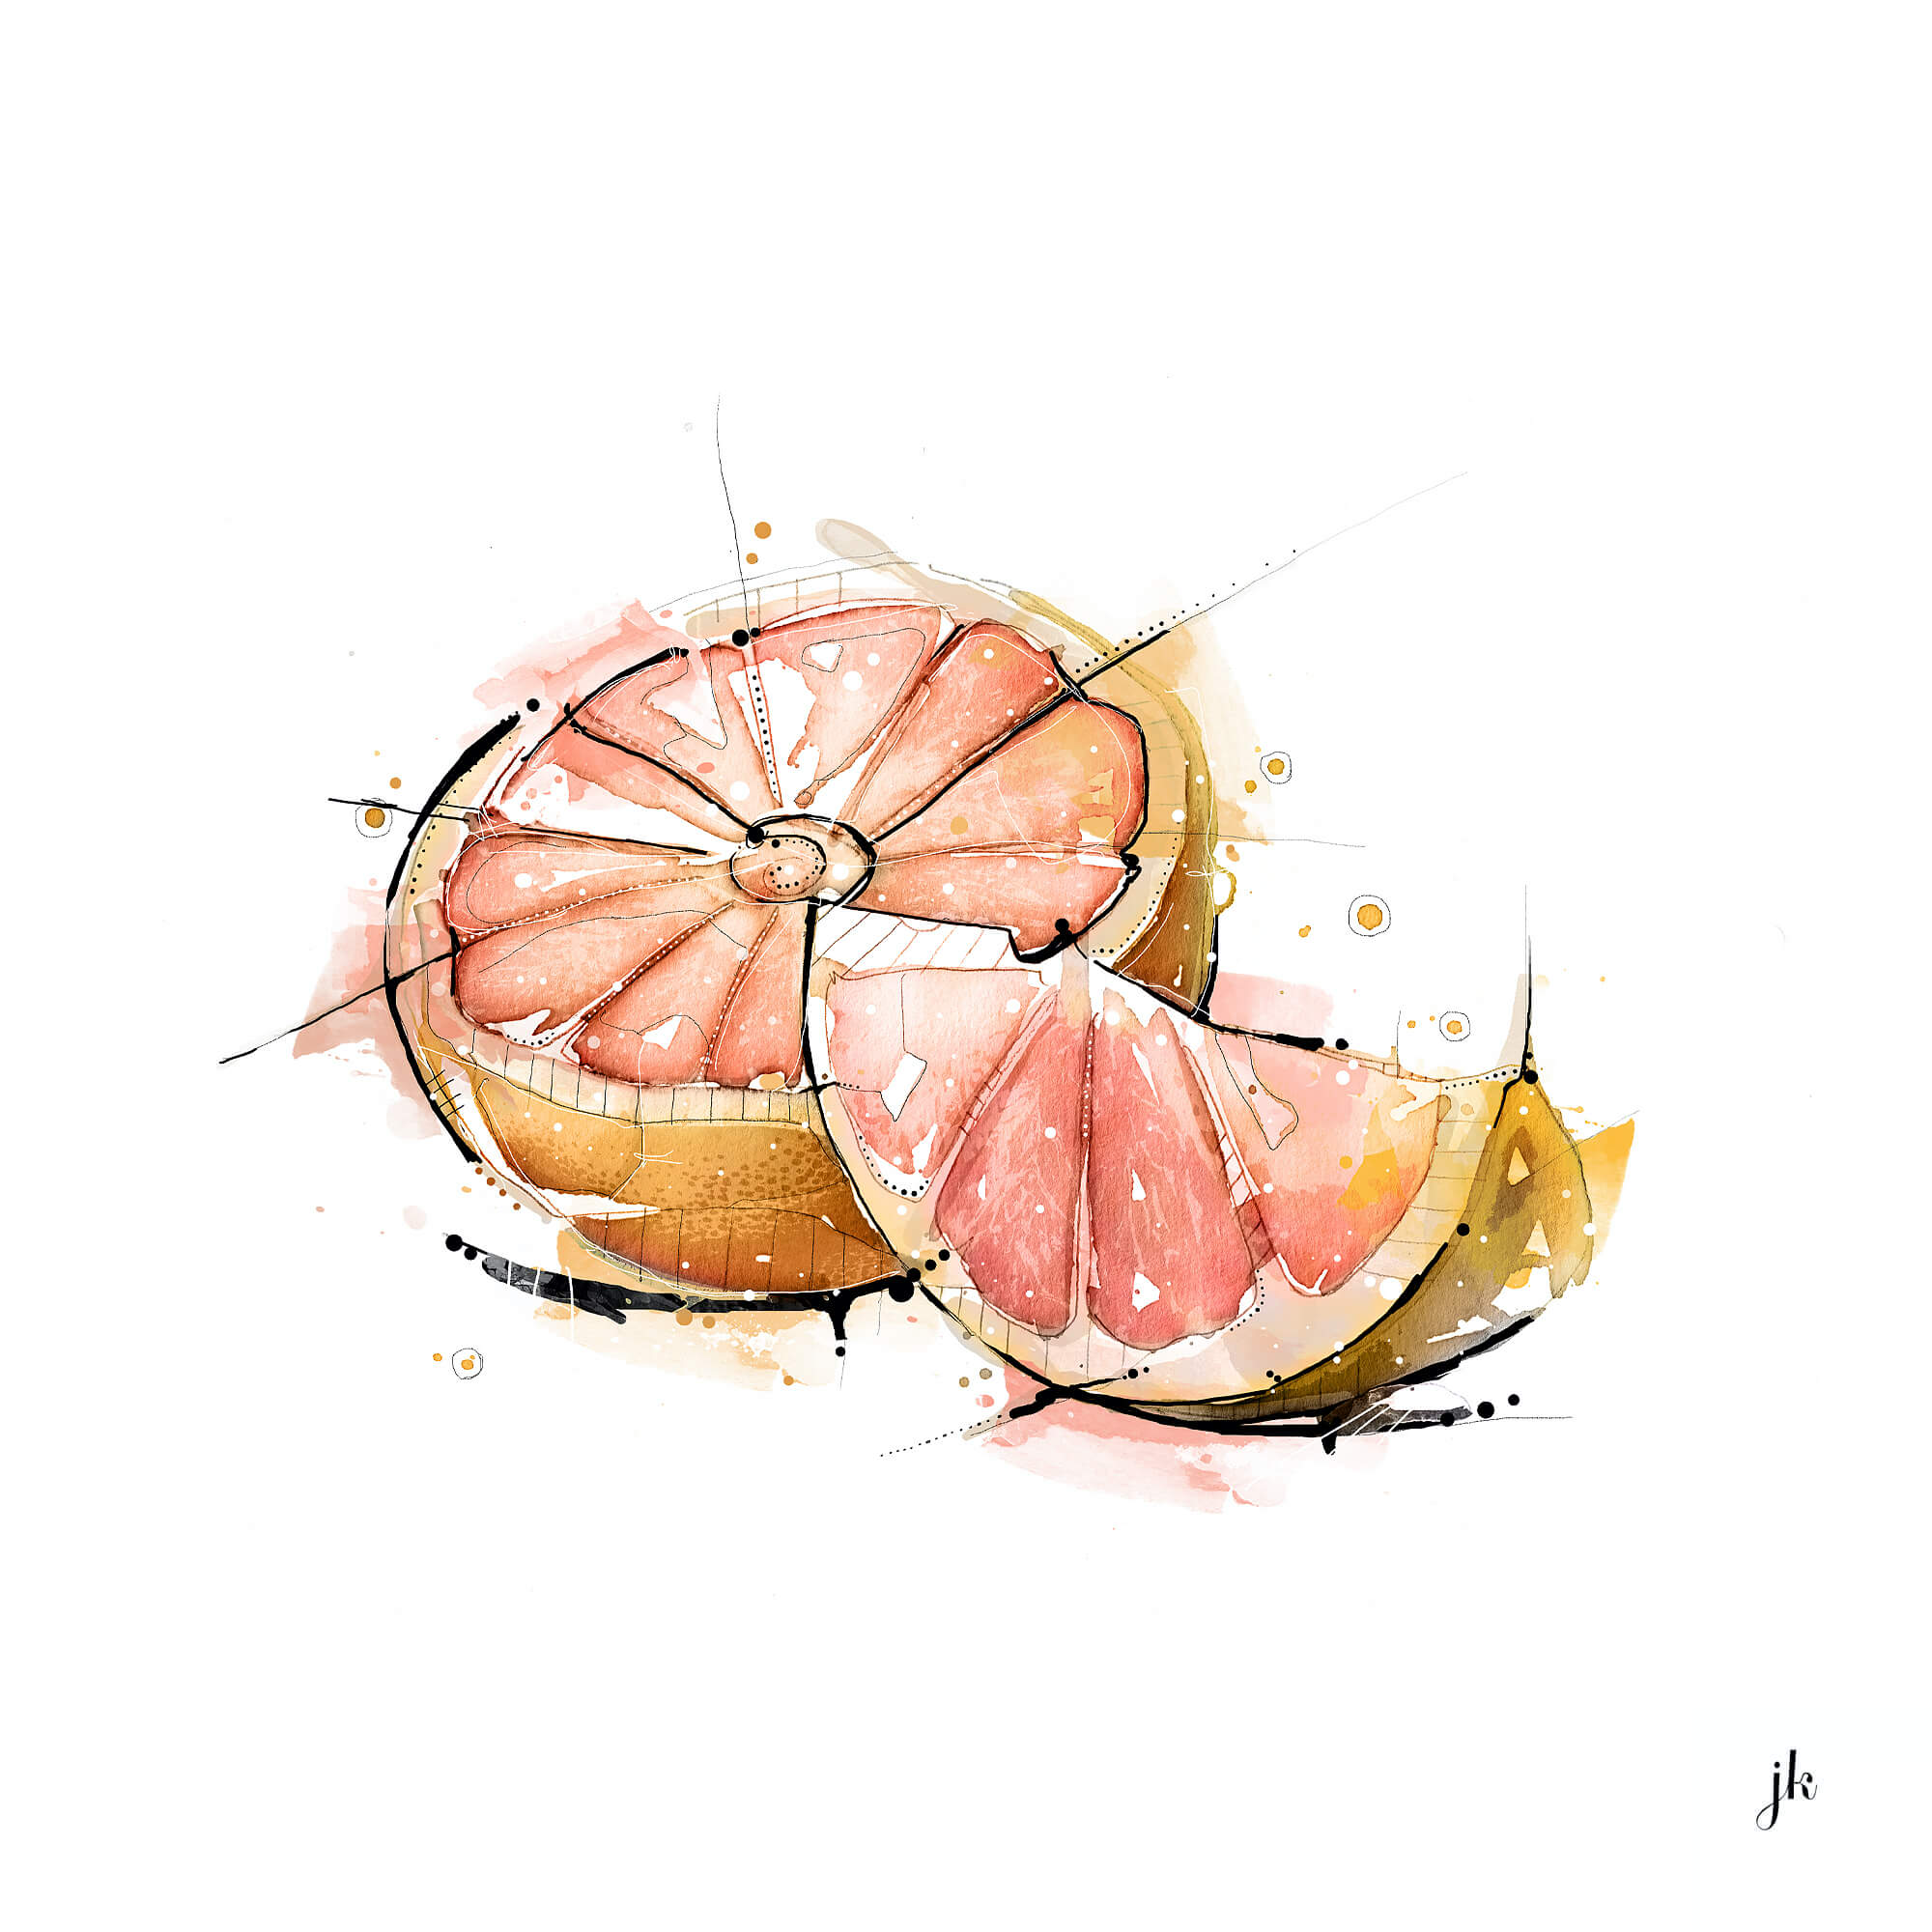 Grapefruit Canvas Print